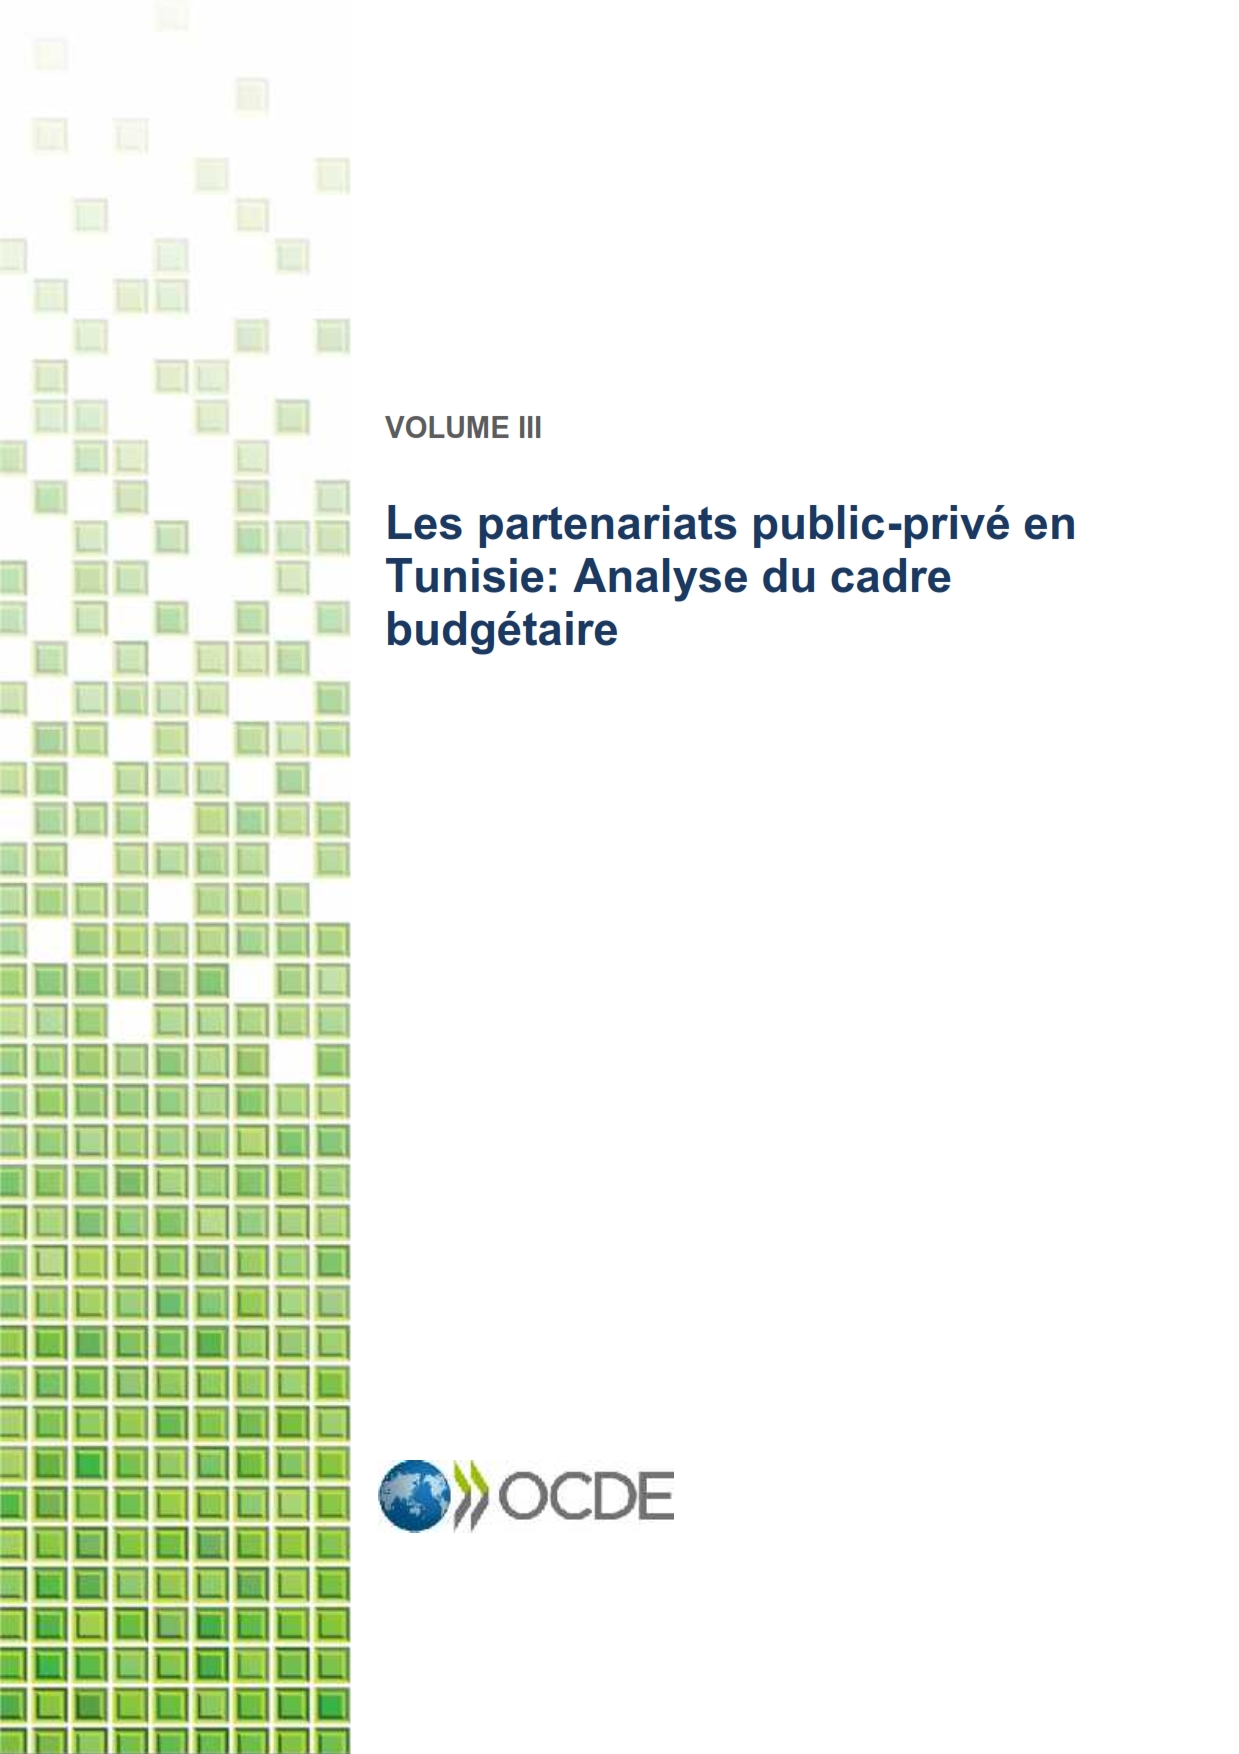 Volume III - Rapport budgétaire PPP